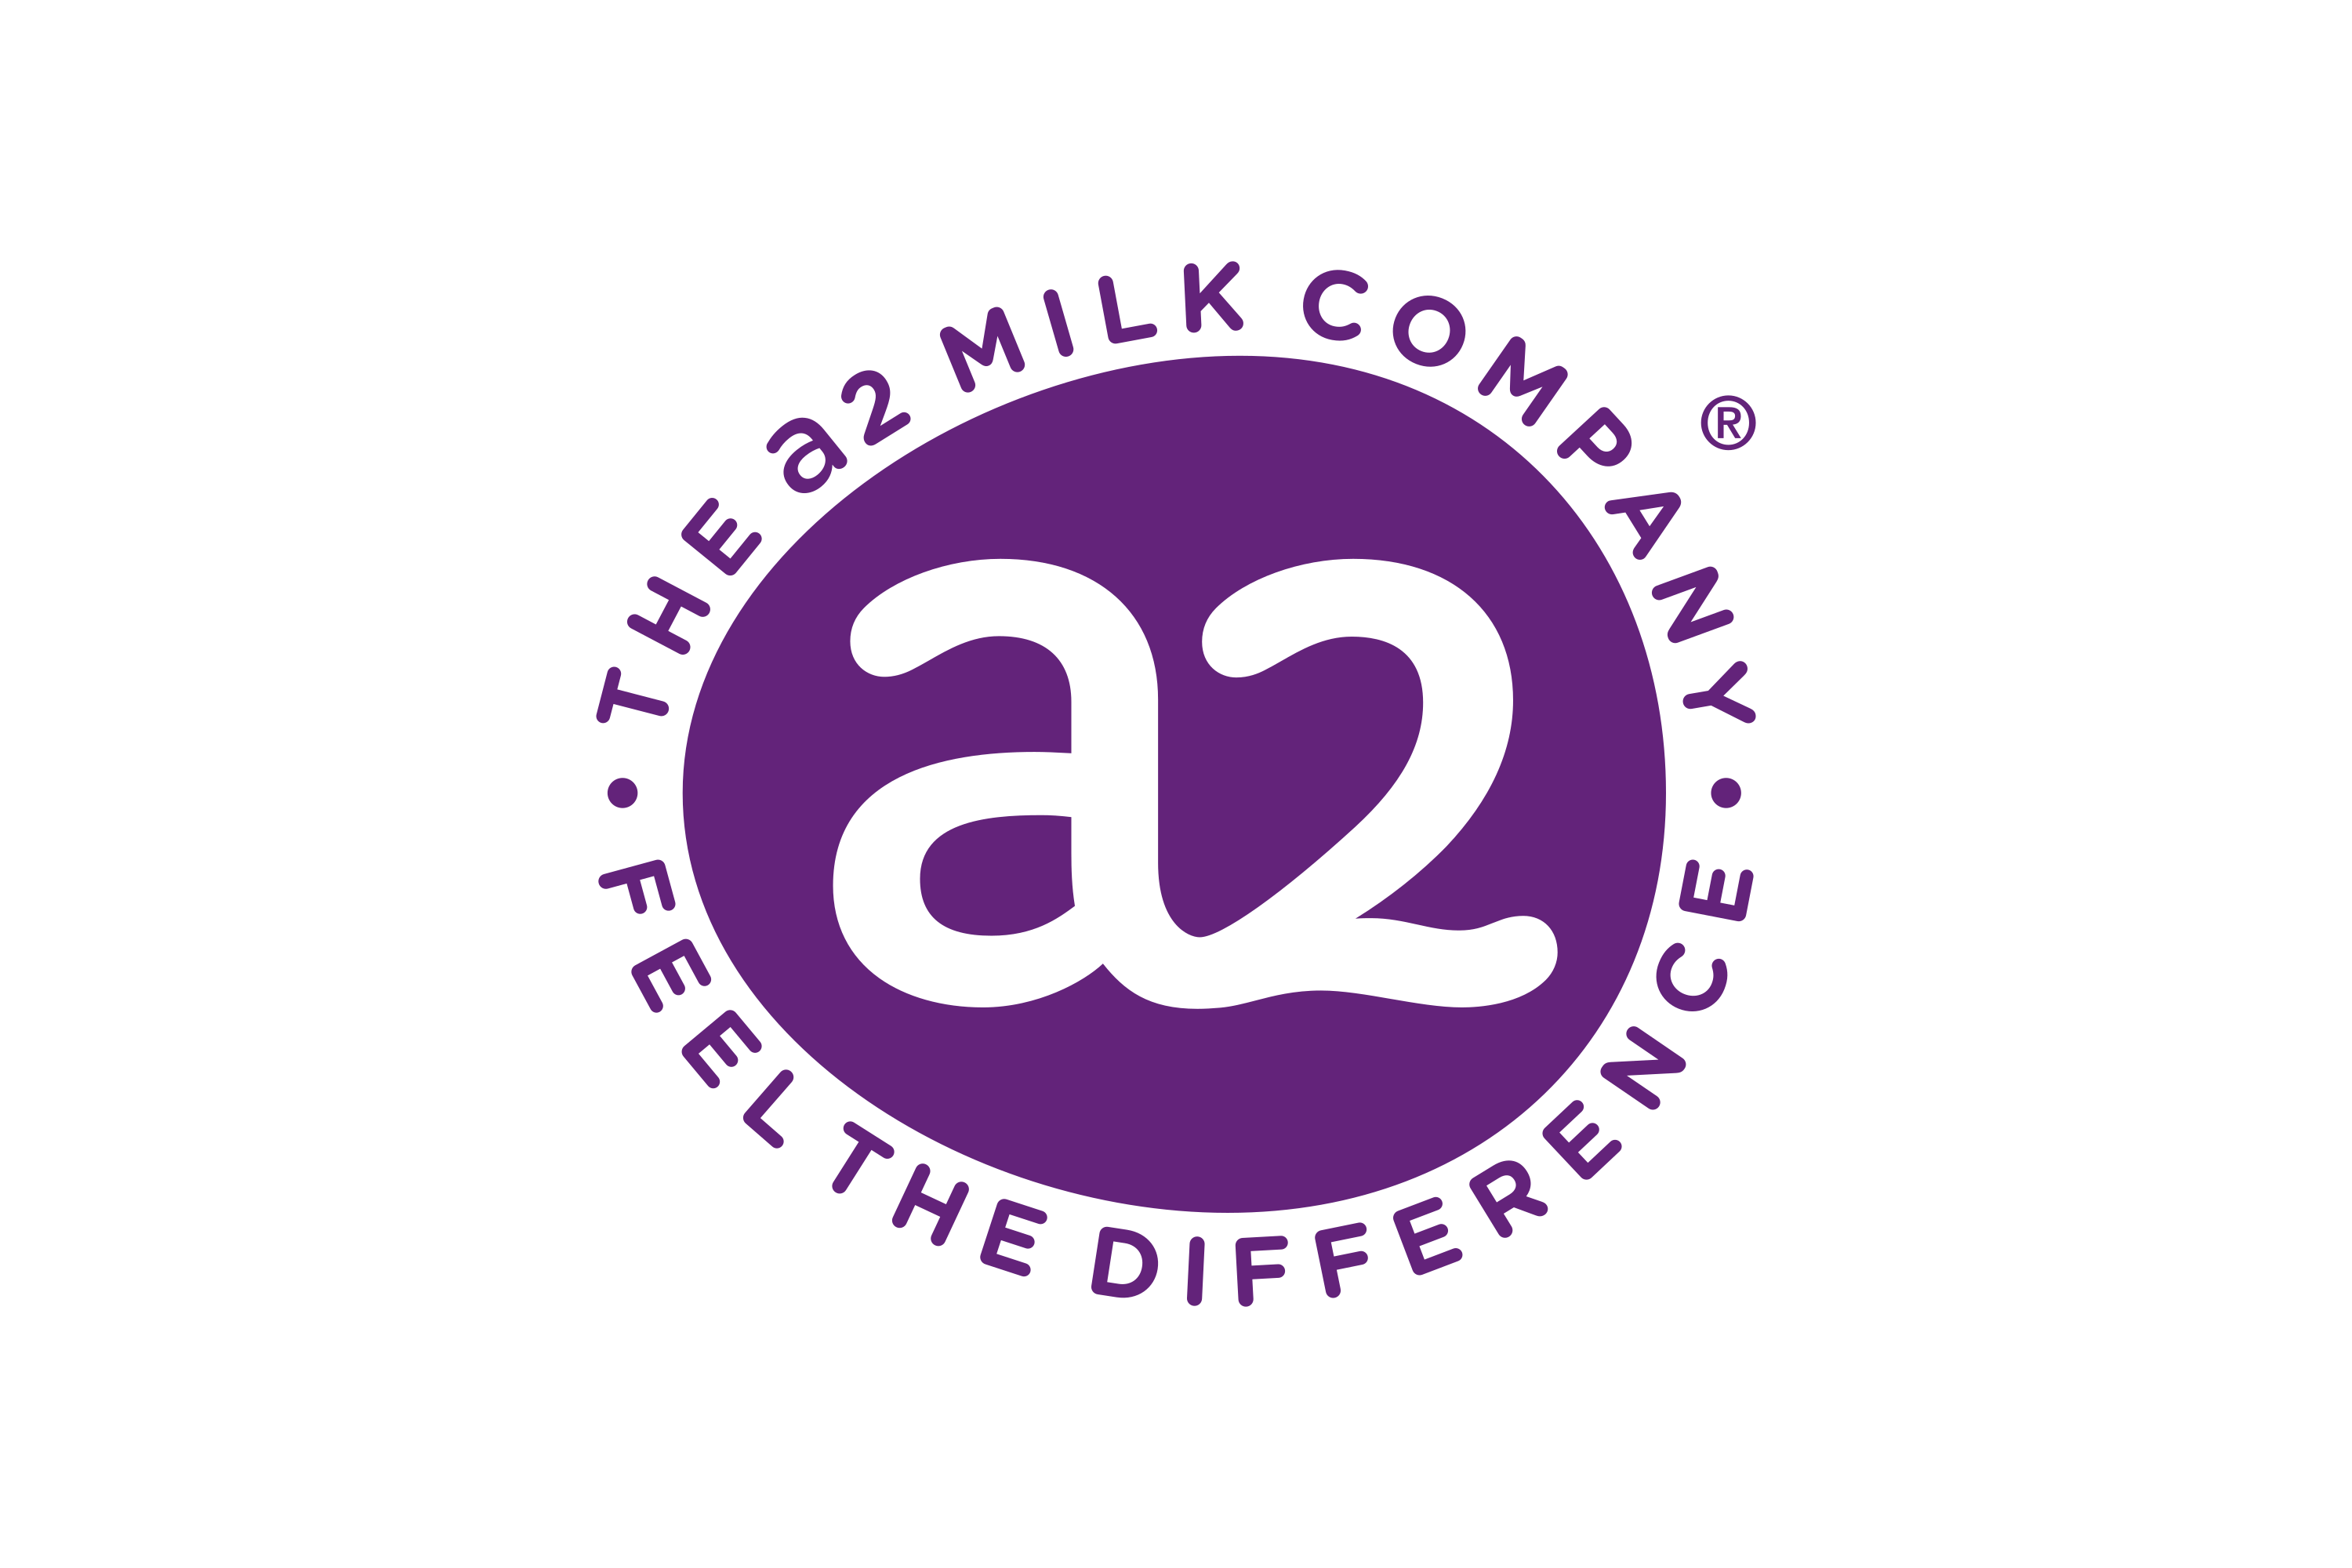 milk products logos